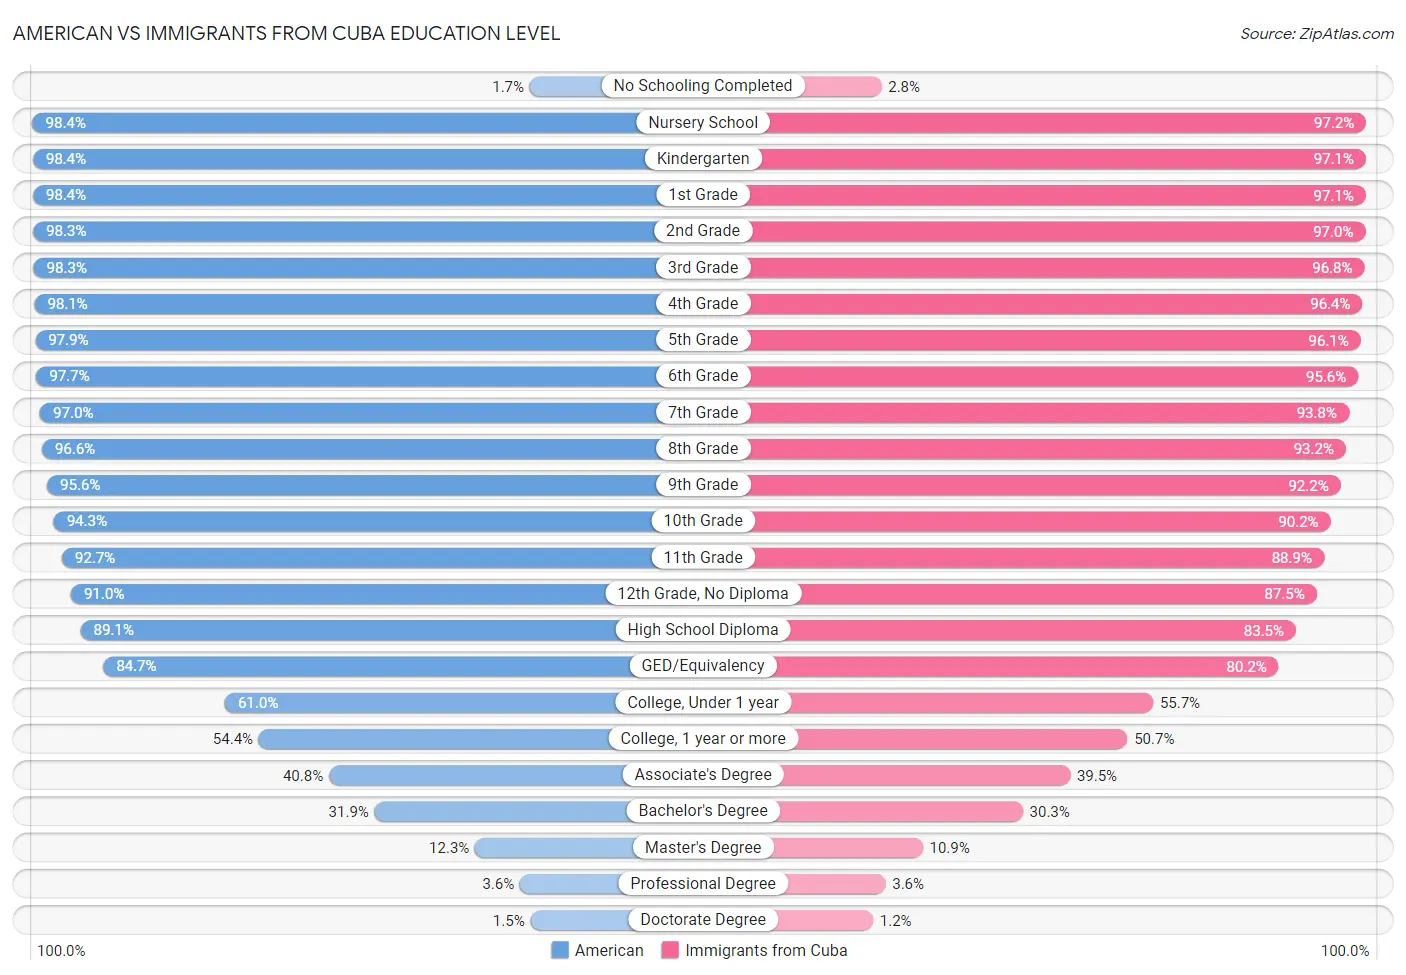 American vs Immigrants from Cuba Education Level